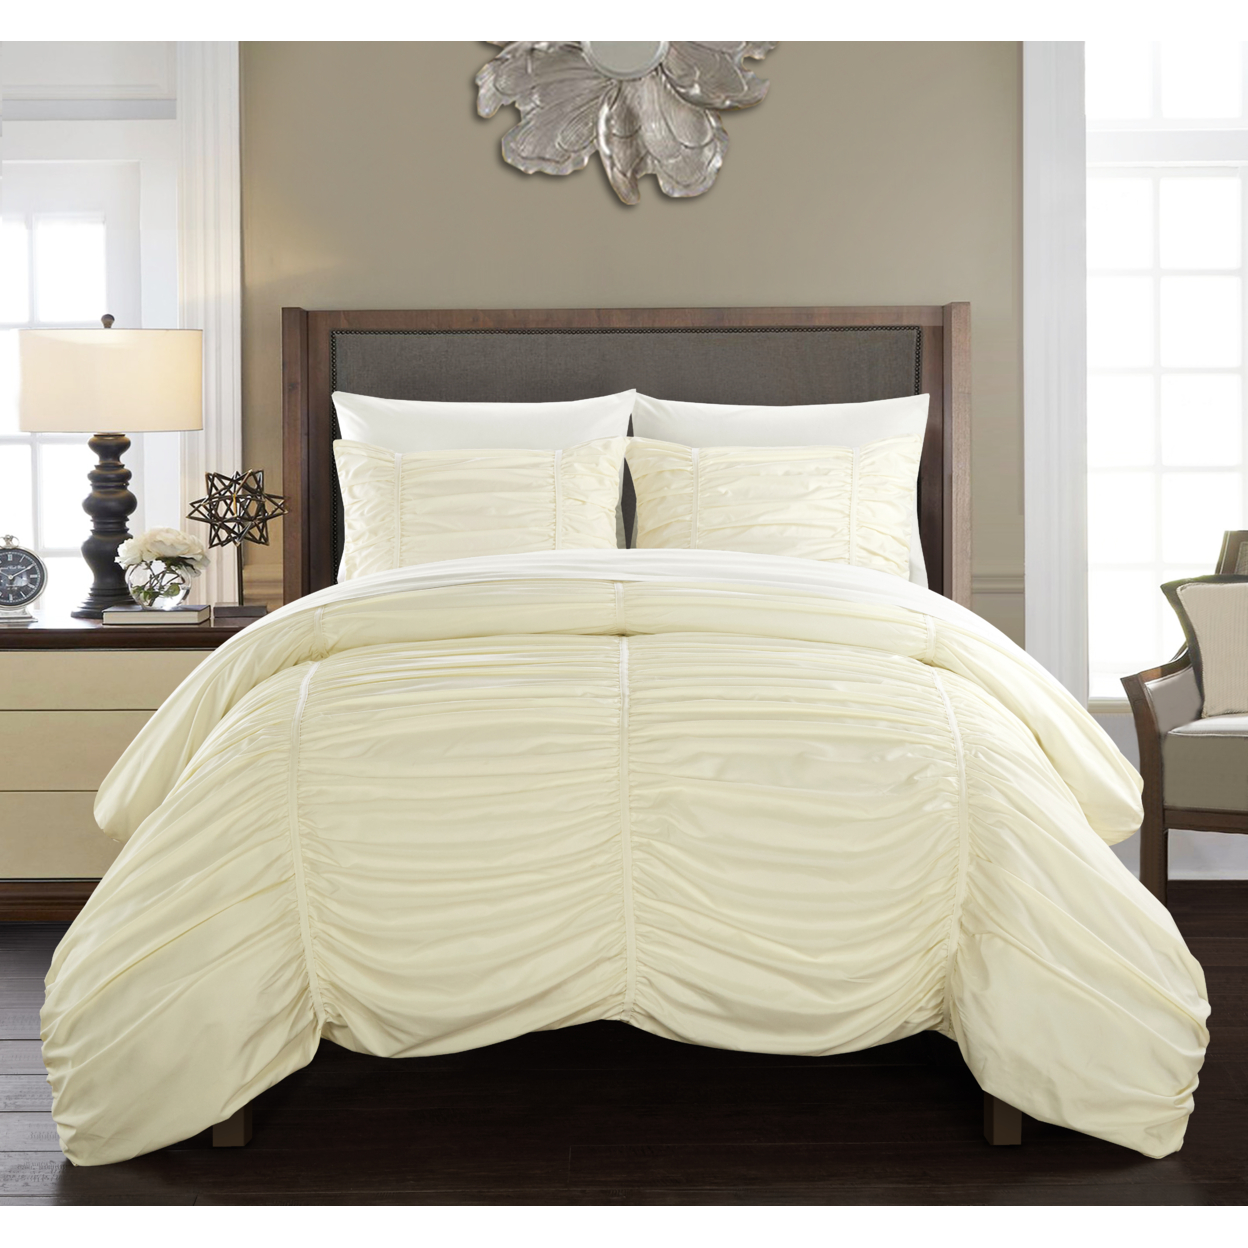 Kiela 2 Pc Or 3 Pc Ruched Comforter Set - White, Twin